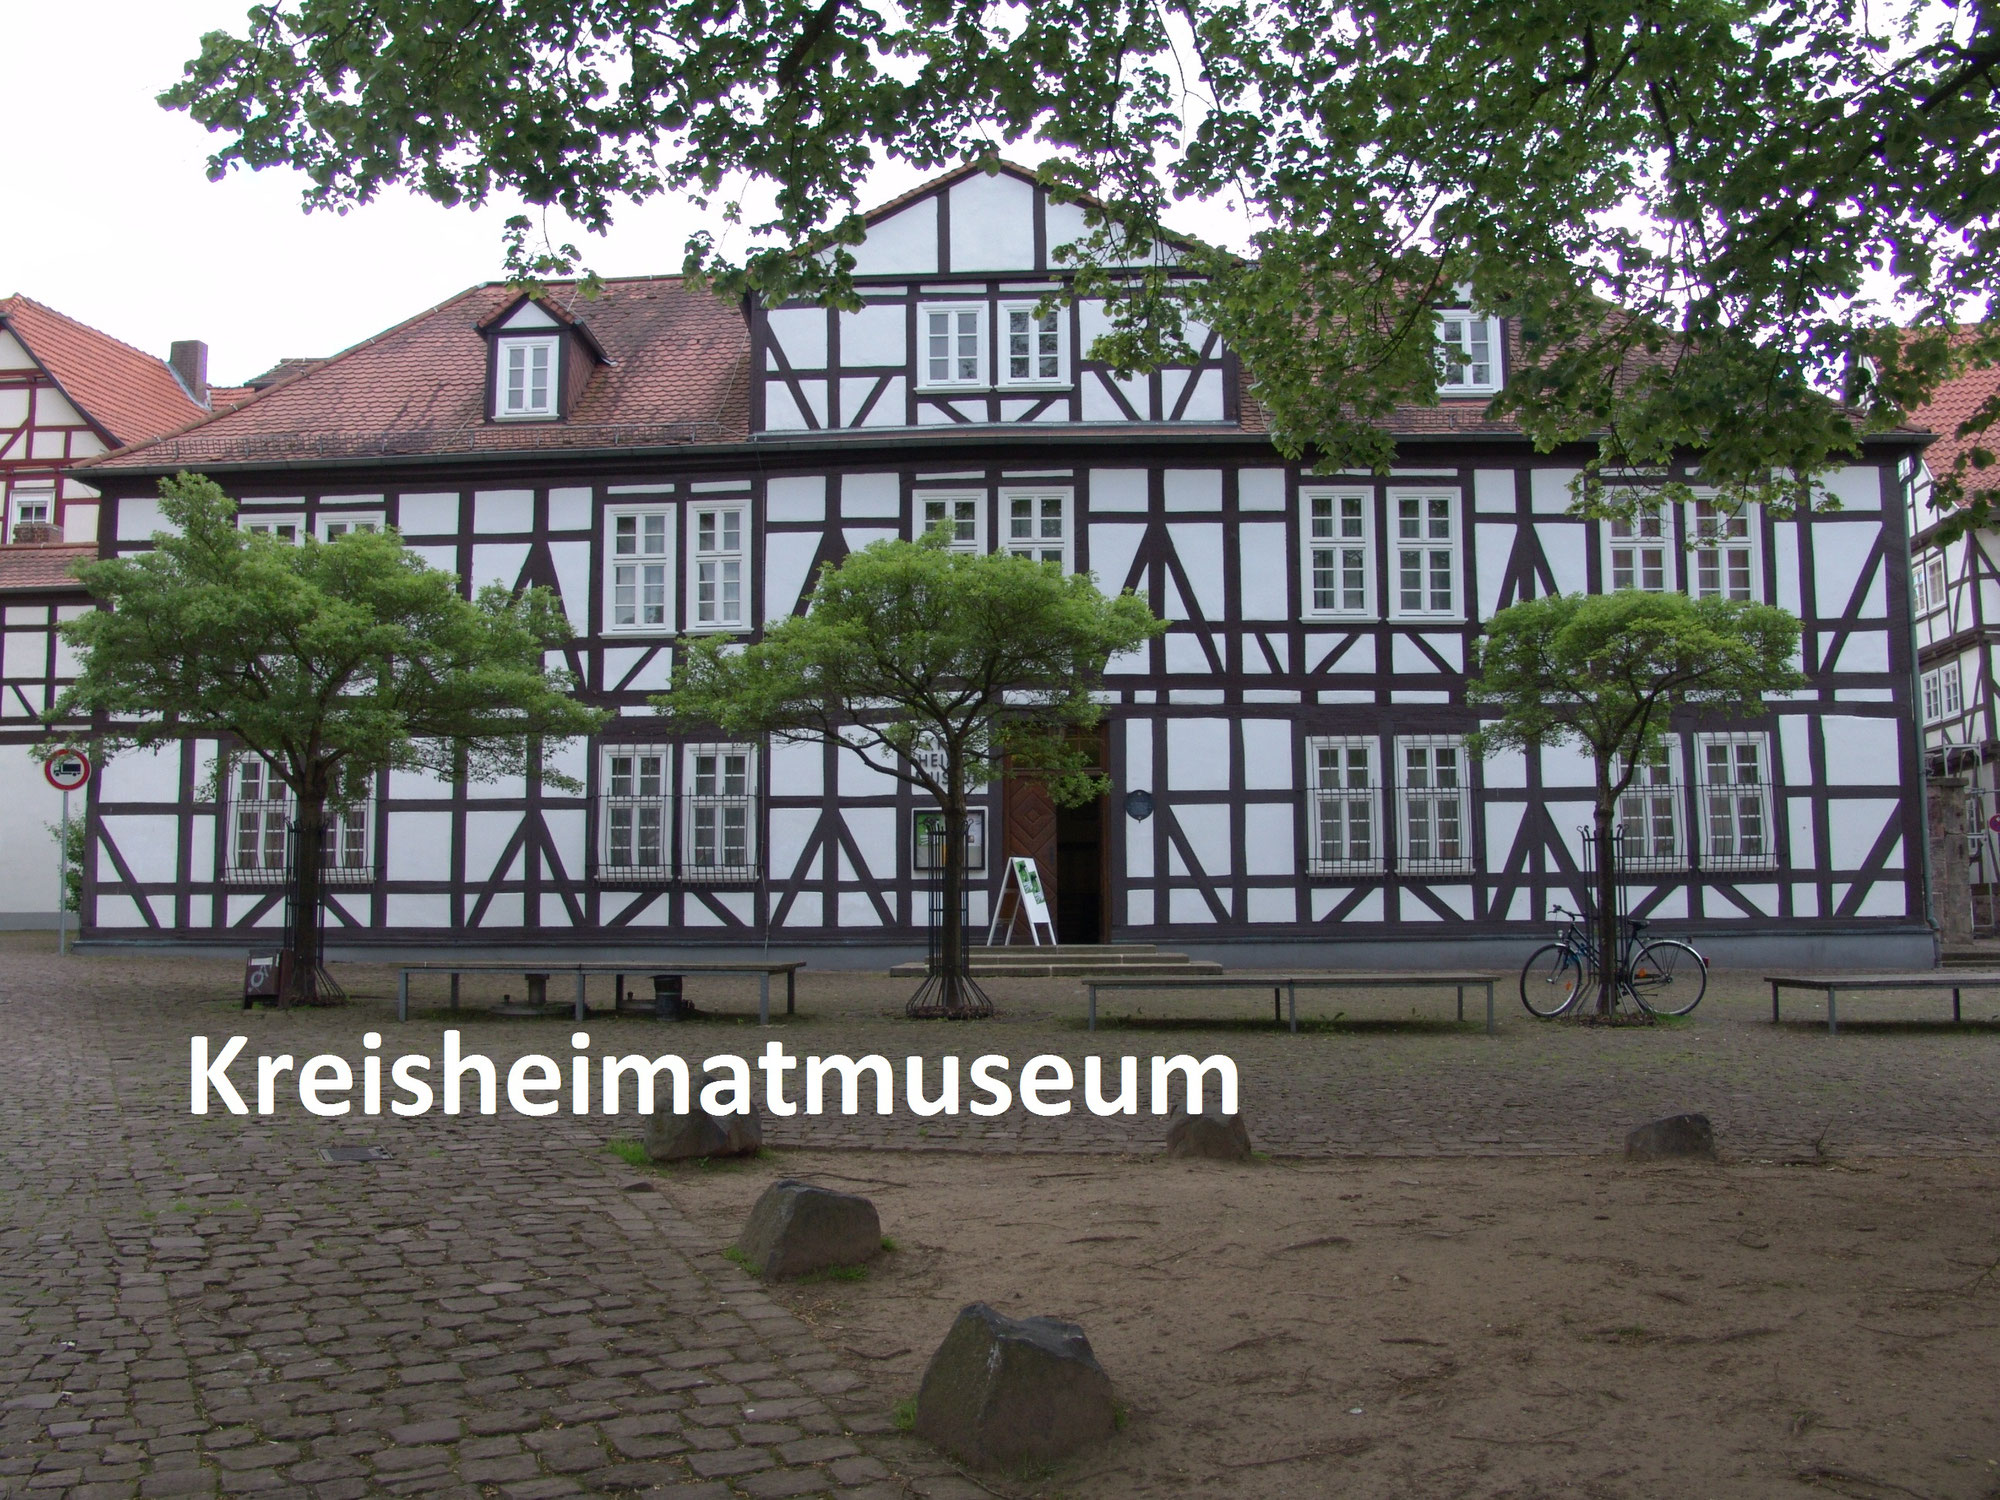 (c) Kreis-heimatmuseum-rotenburg.de